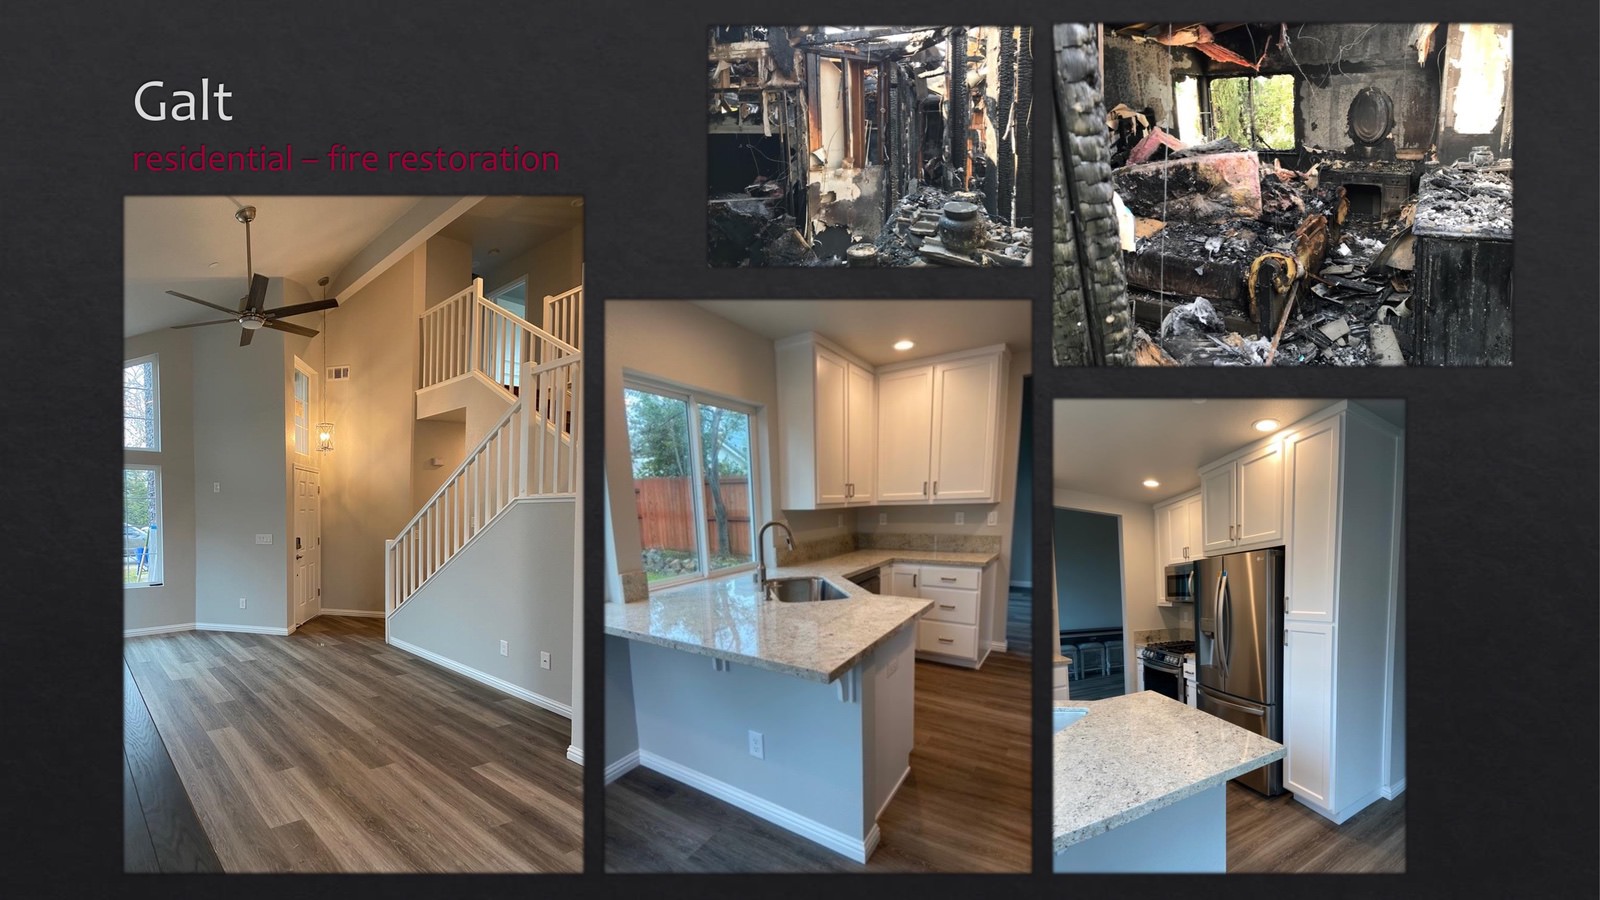 Galt Residential fire restoration - kitchen + stairs - lightbox